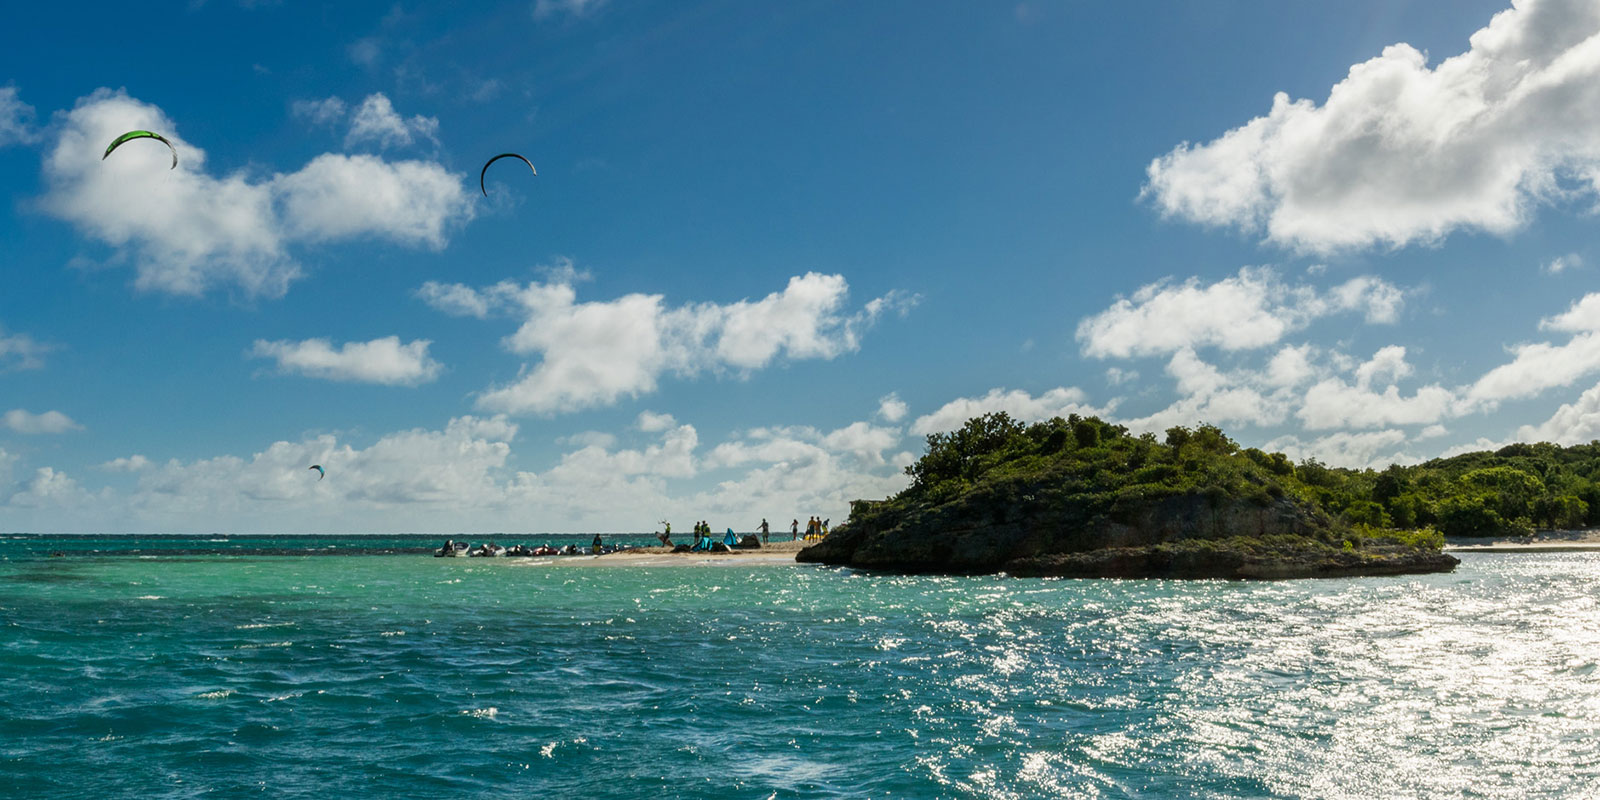 kitesurf in the caribbean